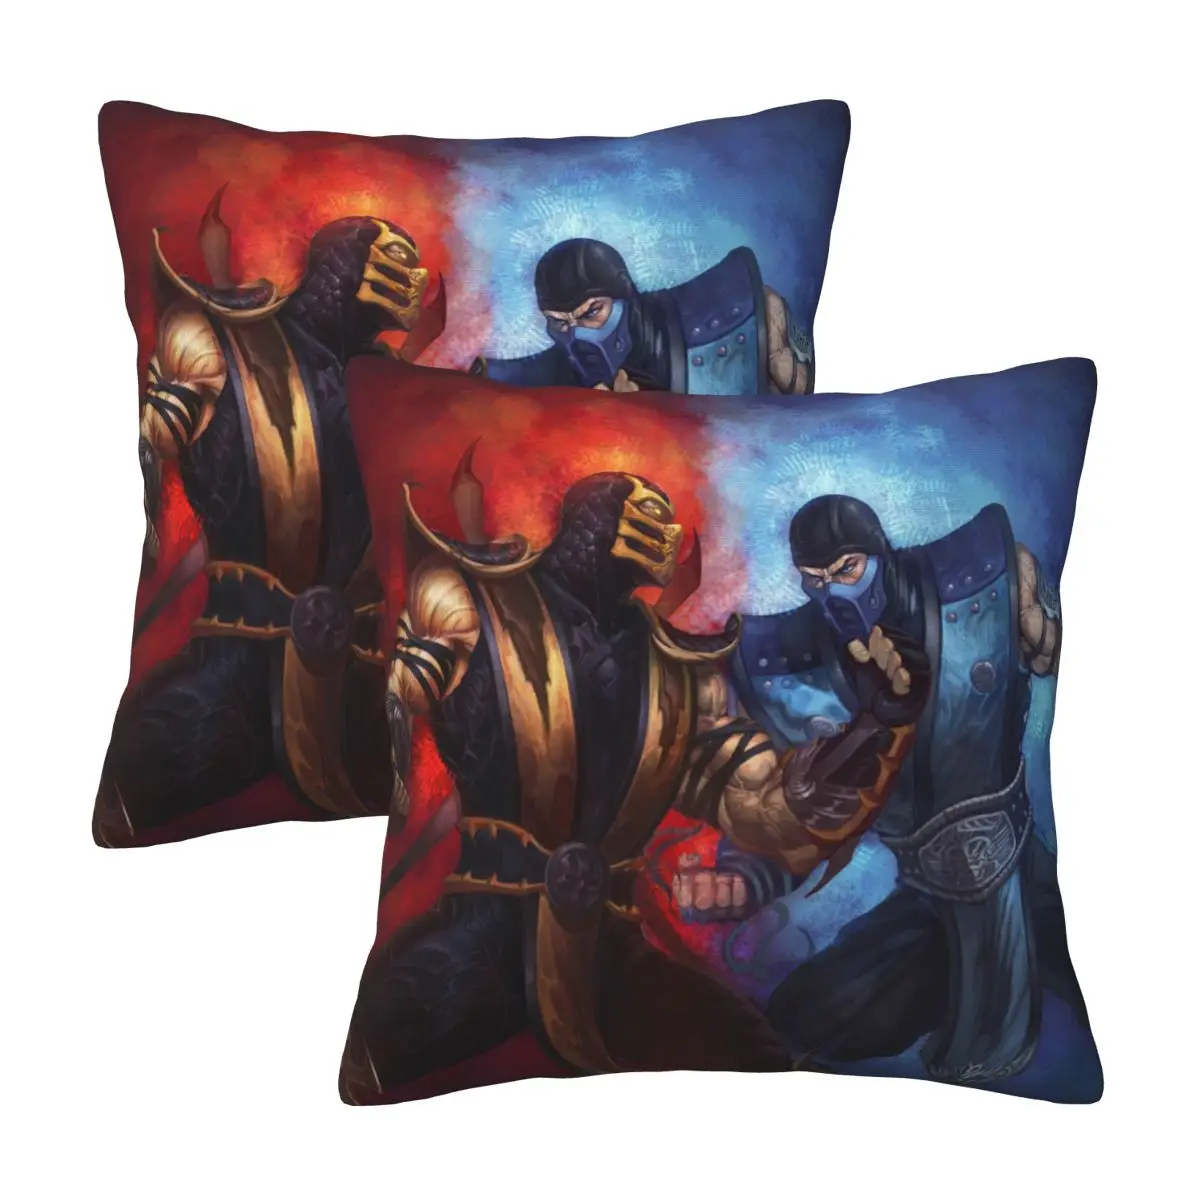 

Mortal Kombat Fashion Pillowcases Decorative Pillow Covers Soft and Cozy 2 PCS